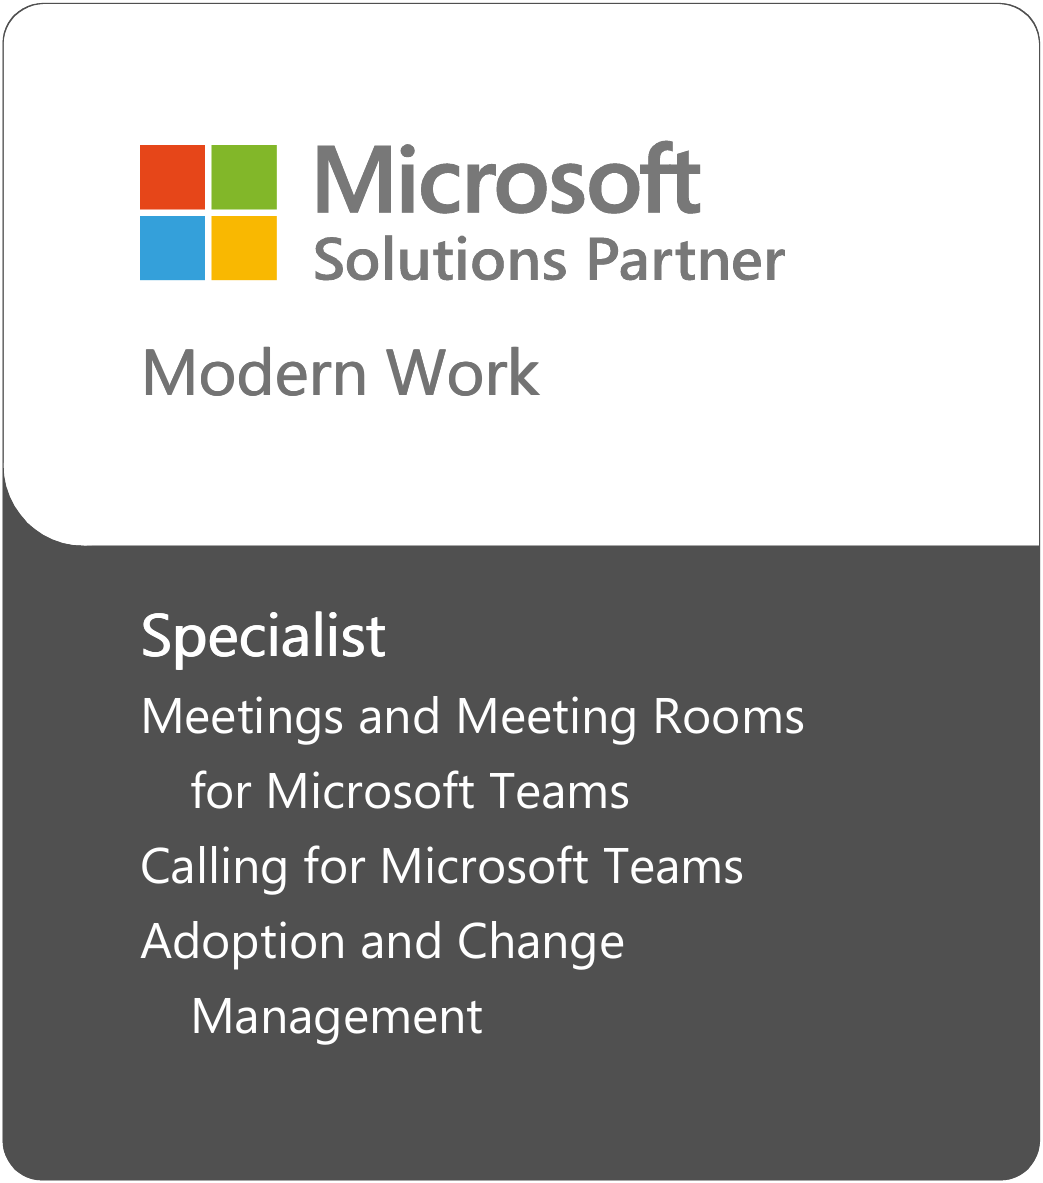 Microsoft Modern Work